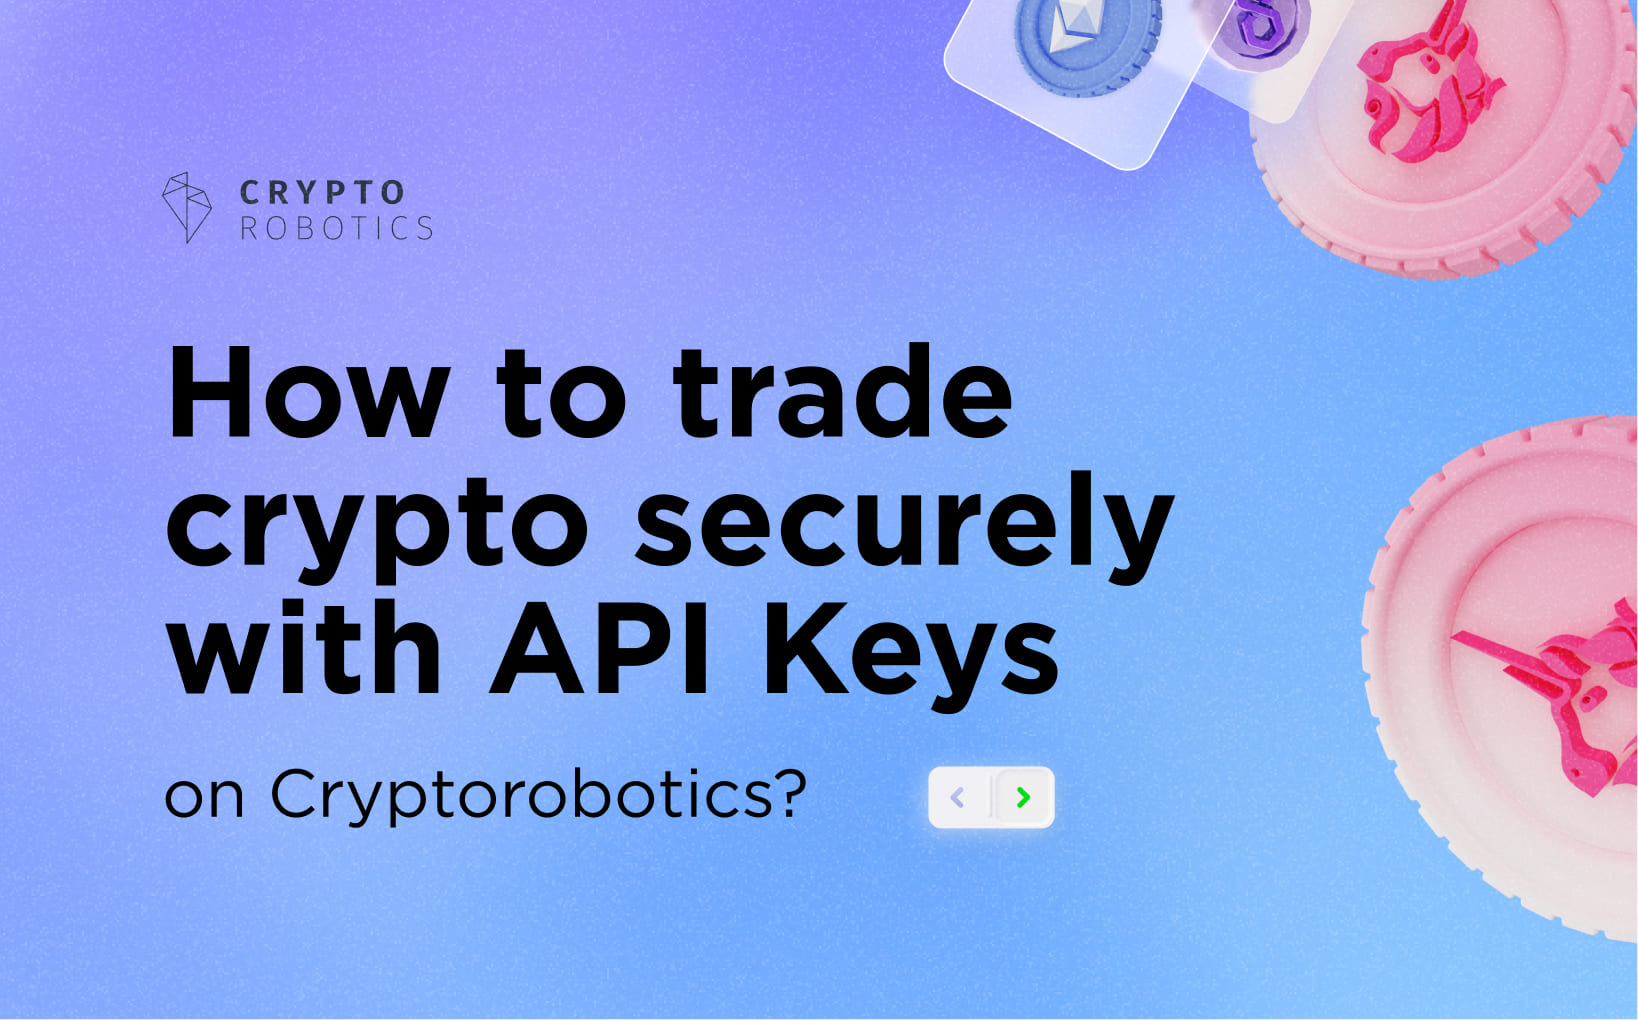 Crypto trading via API keys